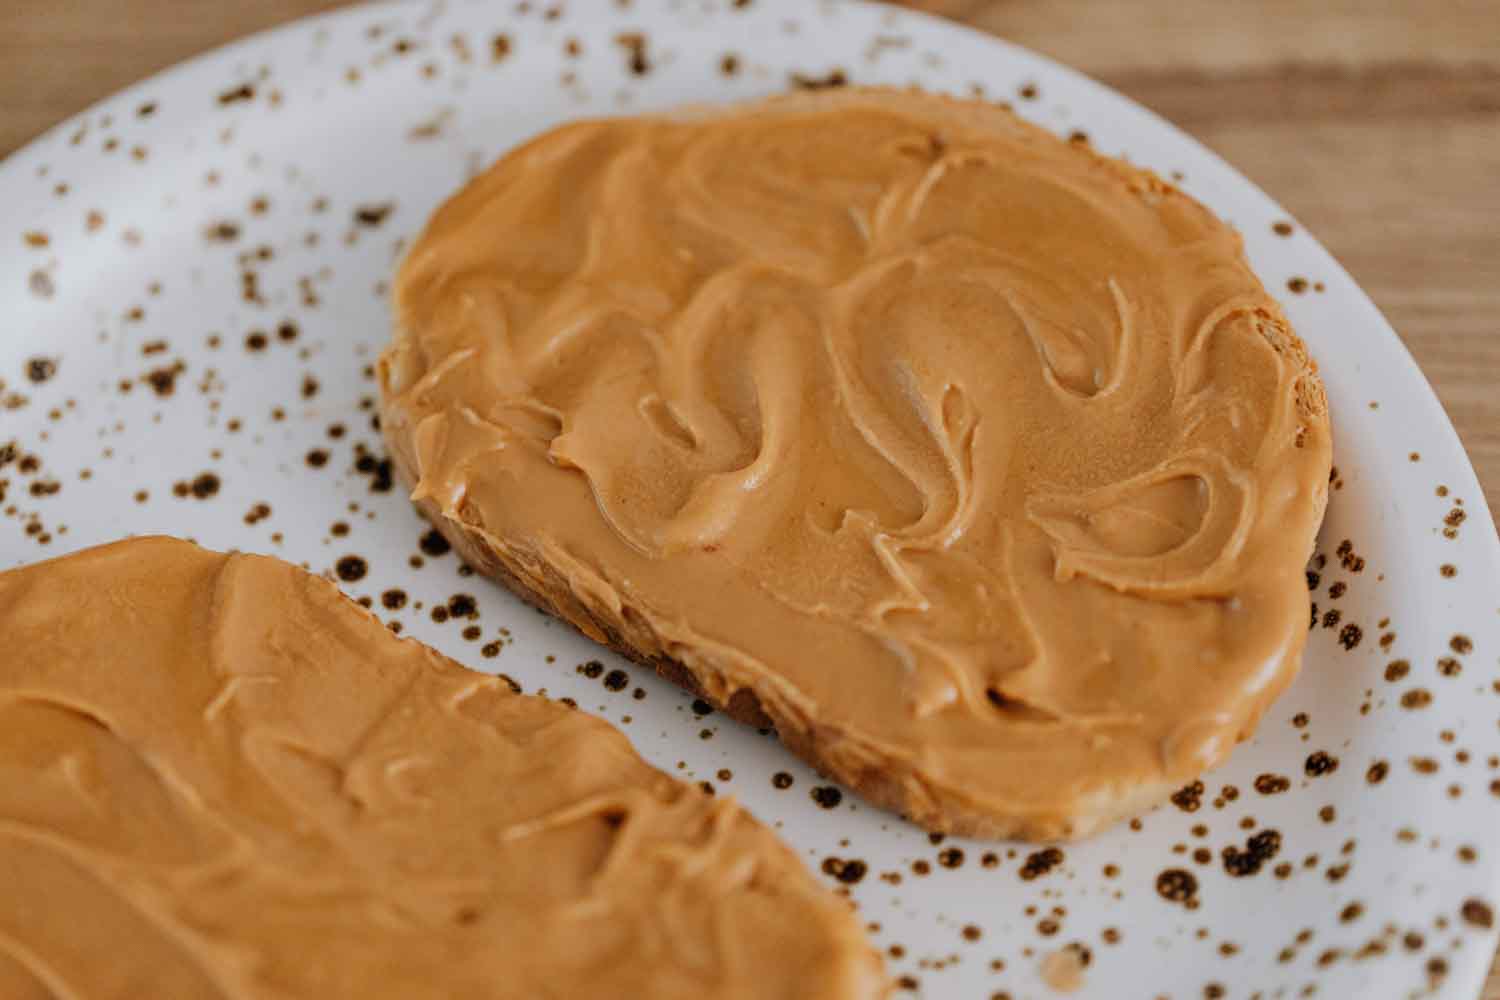 Peanut butter on a slice of bread